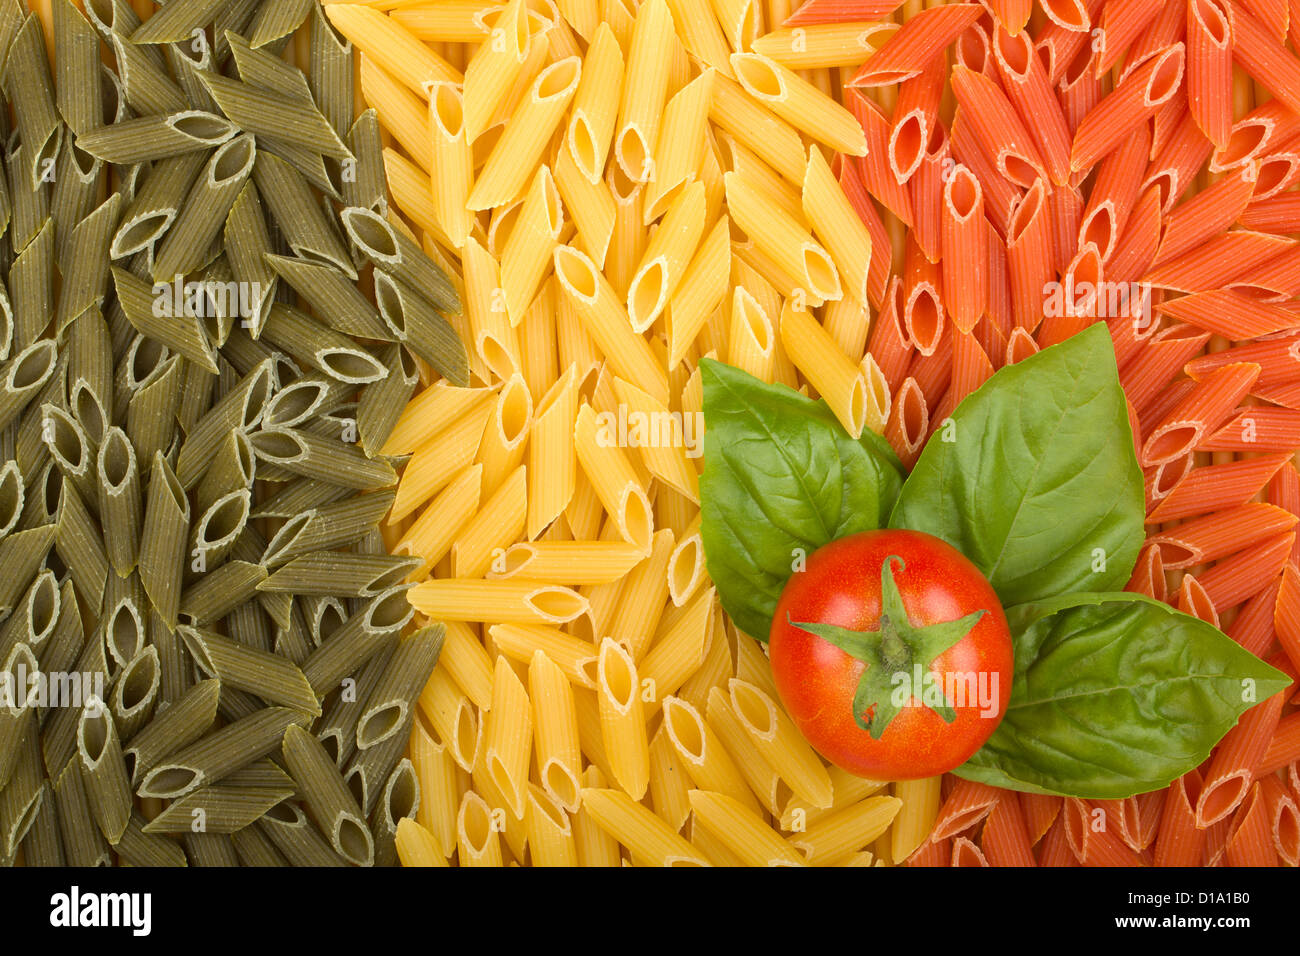 Pasta Italian flag texture with tomato and basil Stock Photo